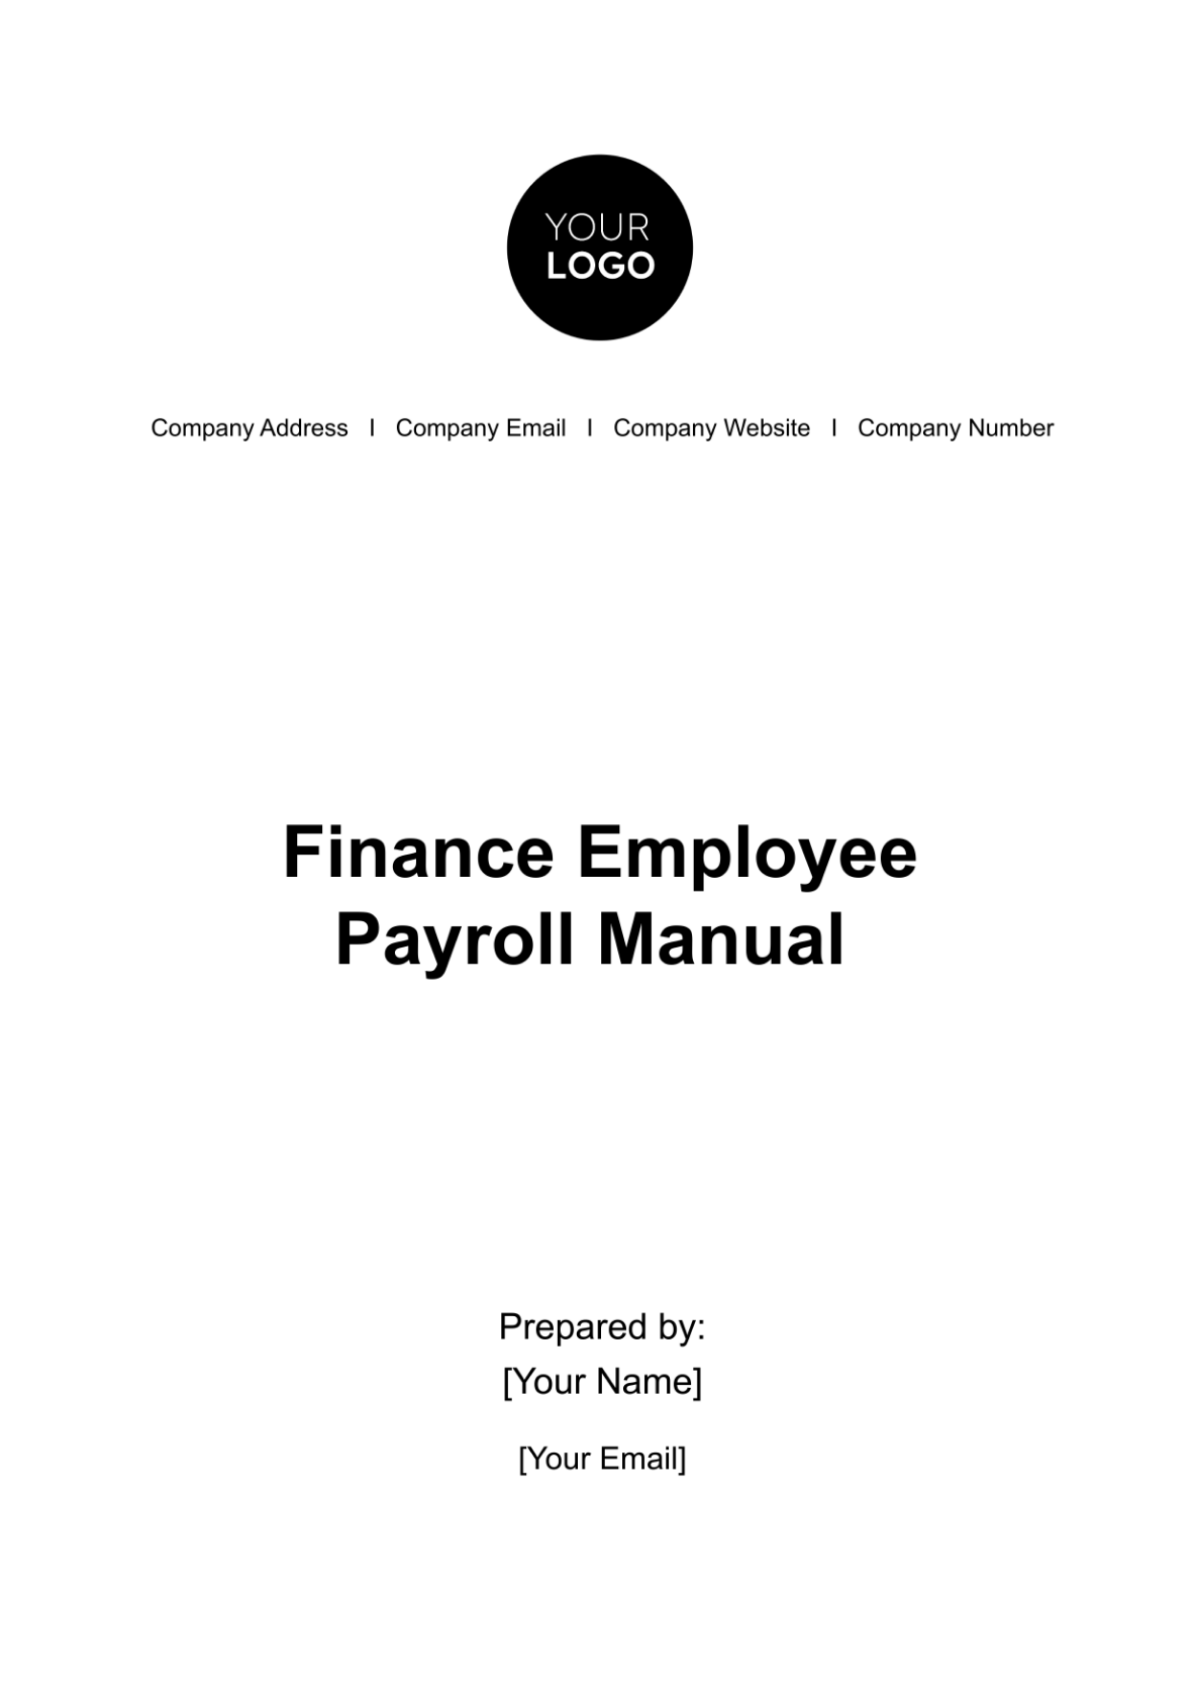 Finance Employee Payroll Manual Template